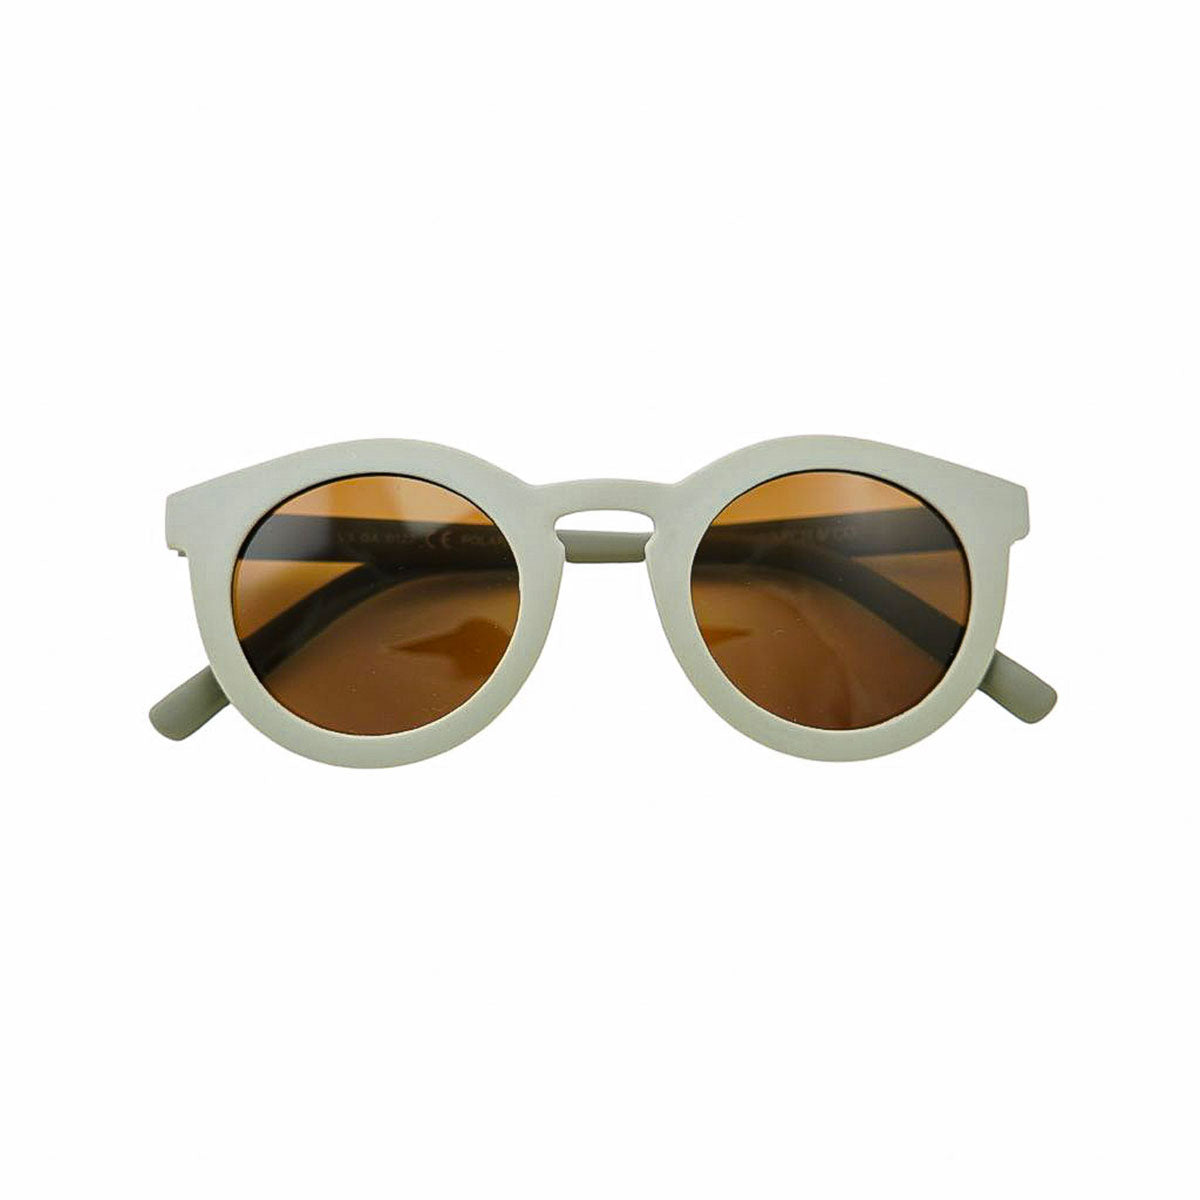 Grech & co. Sunglasses classic bendable adult bog